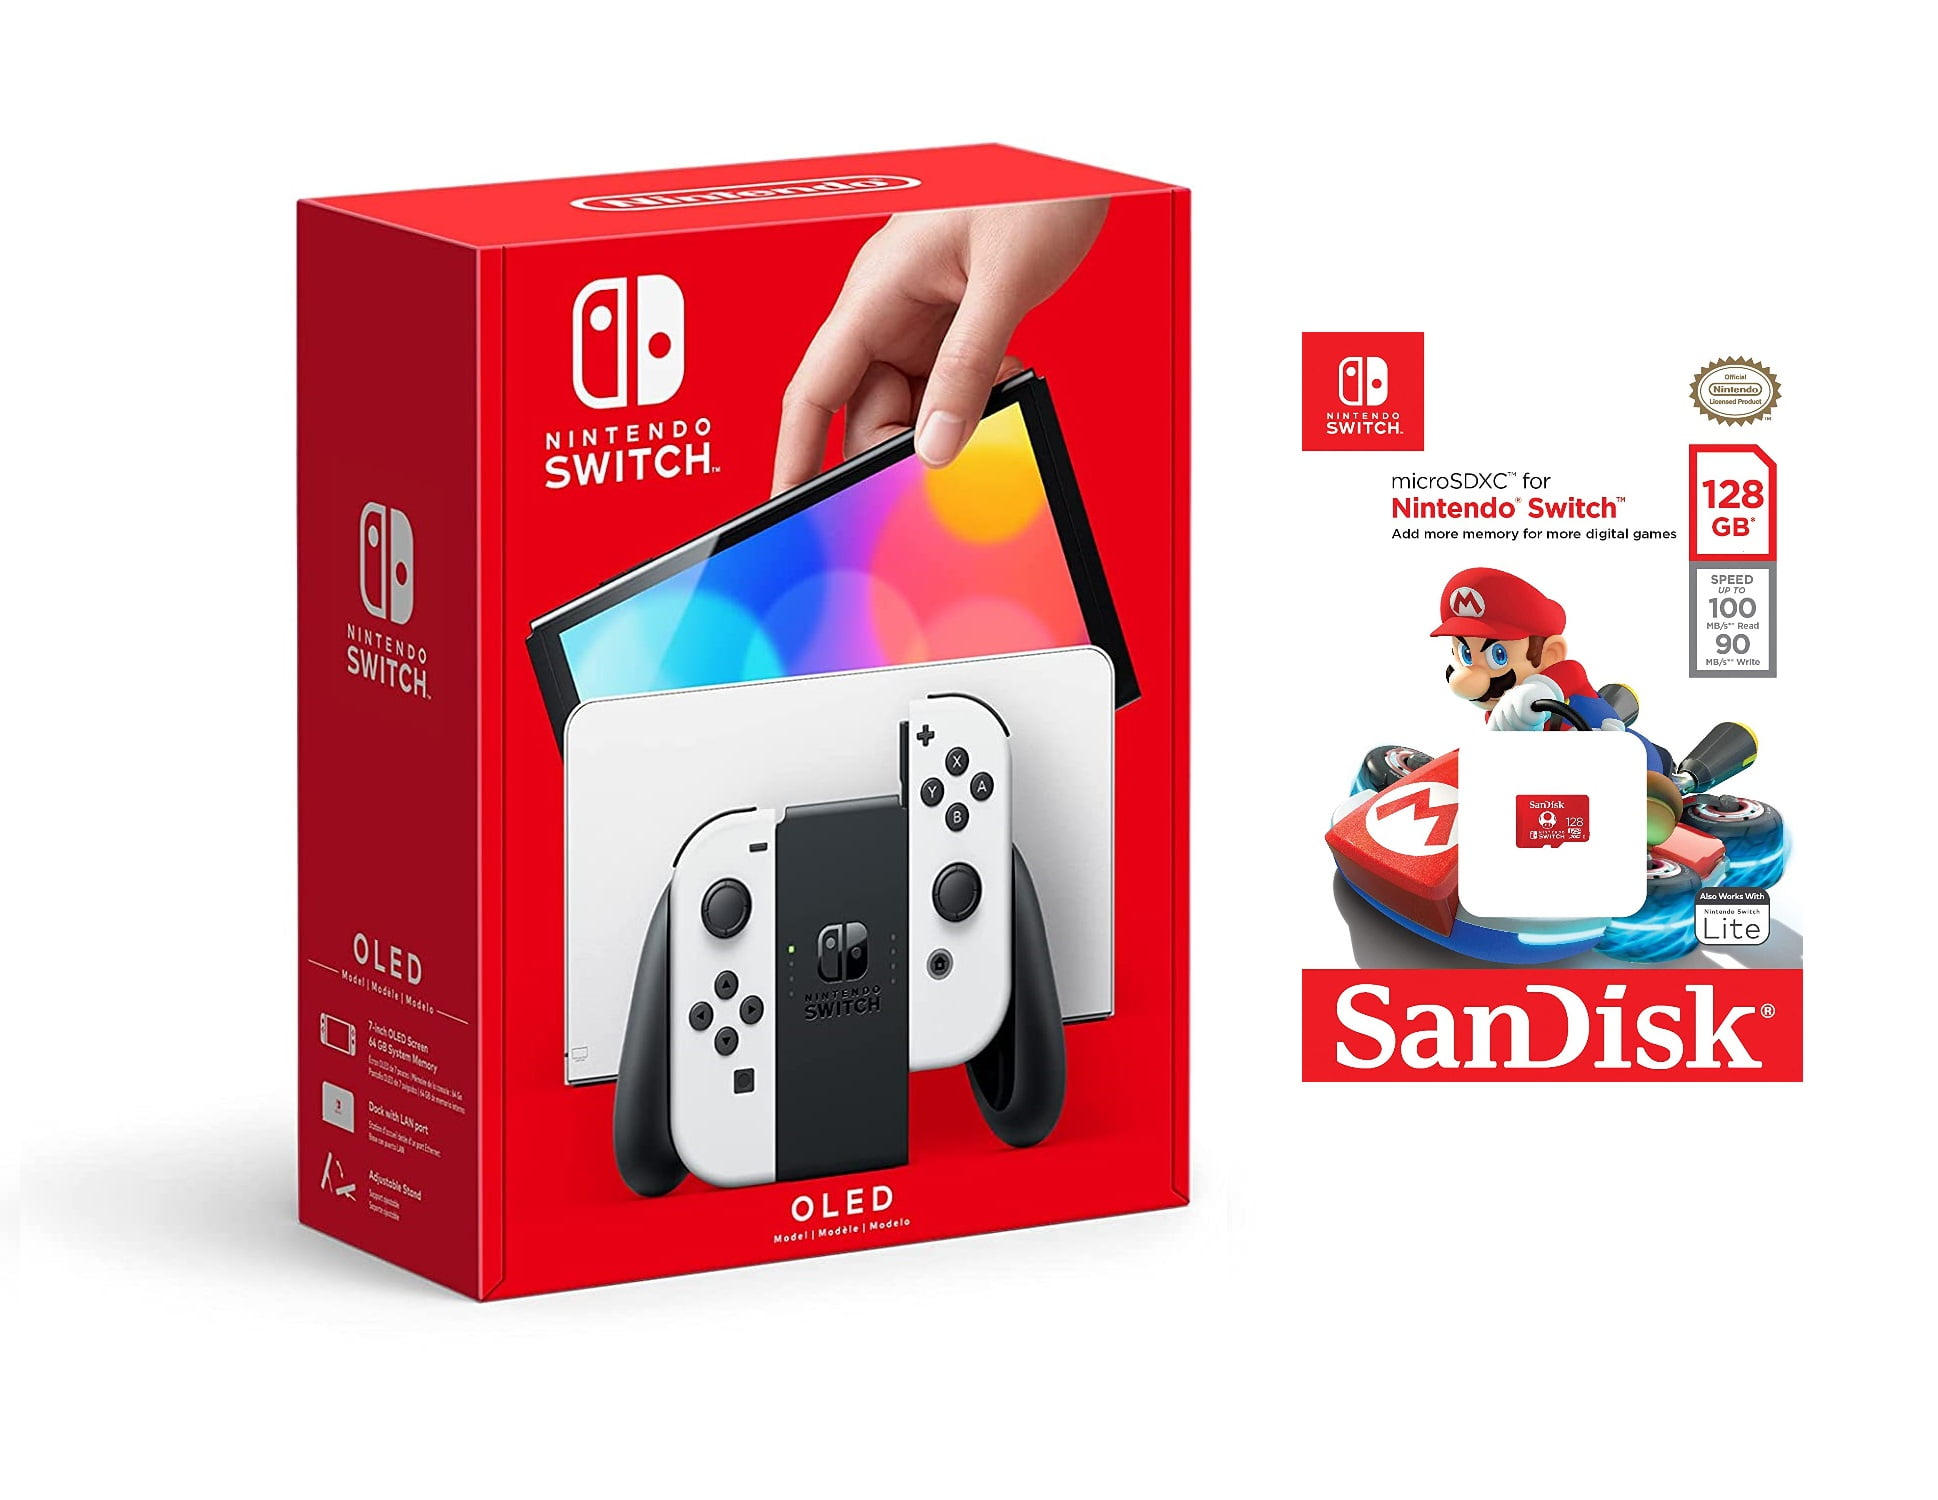 Nintendo Switch – OLED (Sw Oled) Model w/ Joy-Con - Walmart.com